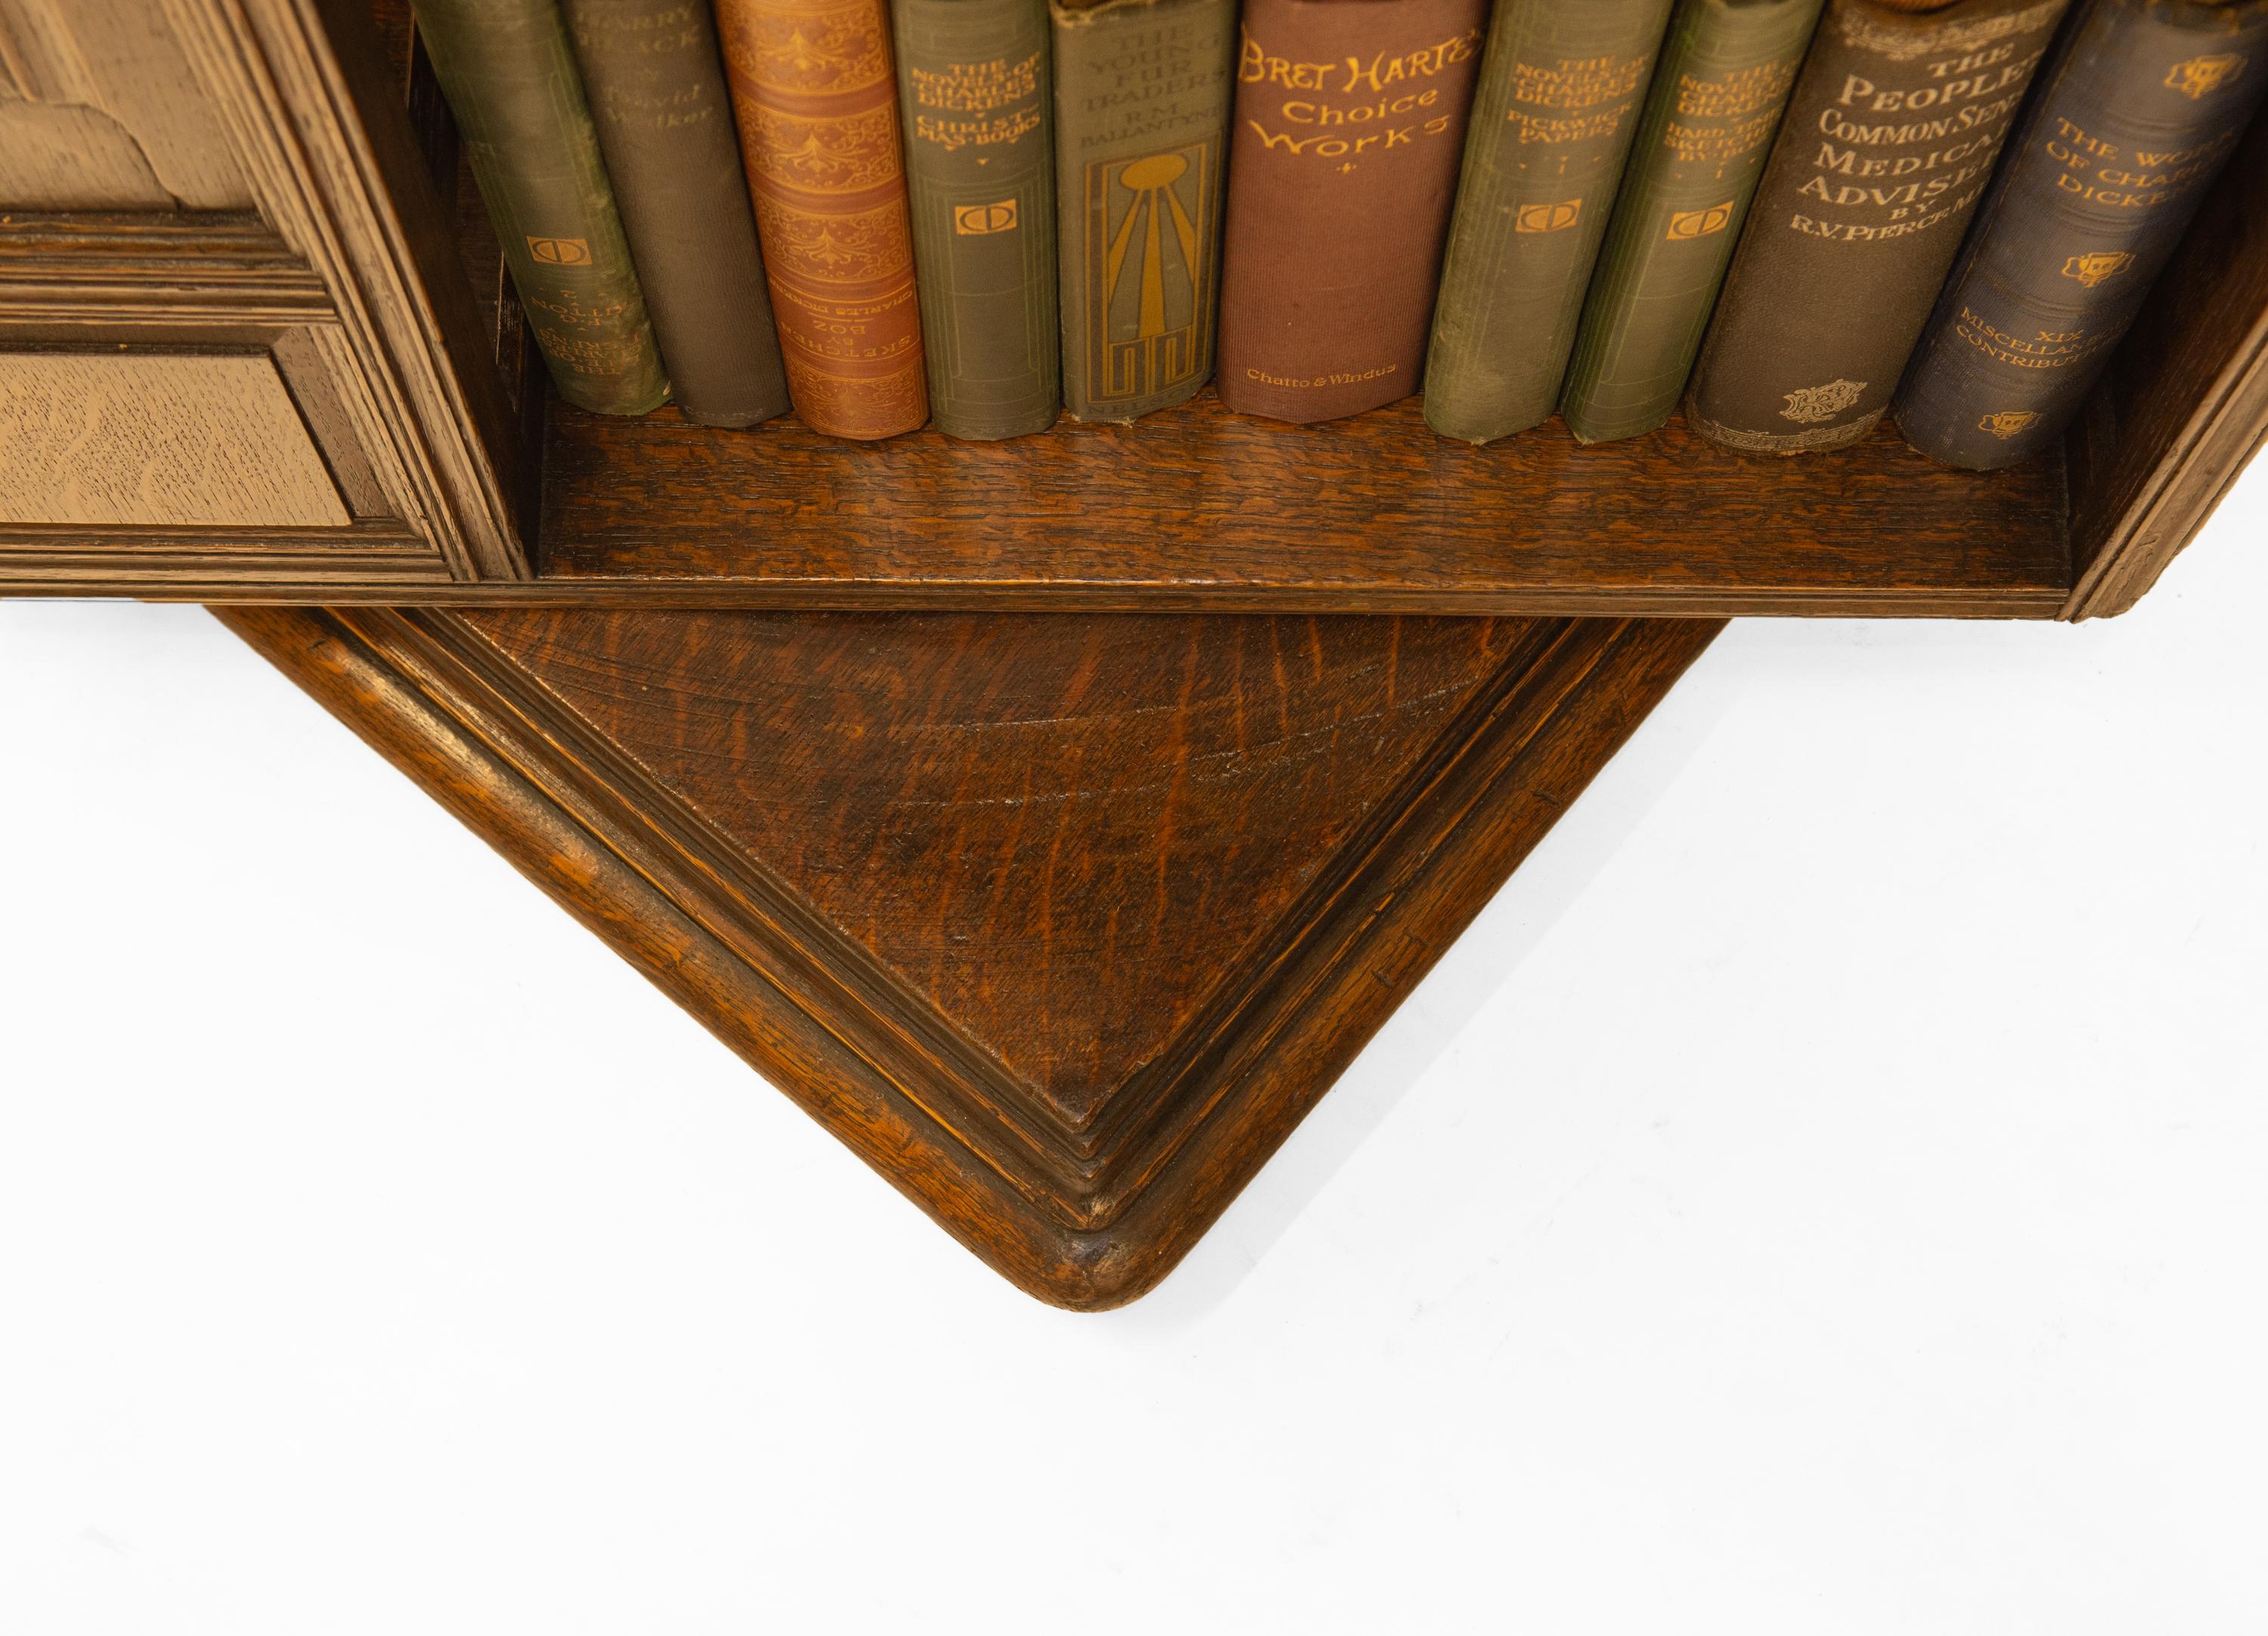 Antique English Oak Large Revolving Bookcase Colman's Mustard Family Provenance For Sale 14